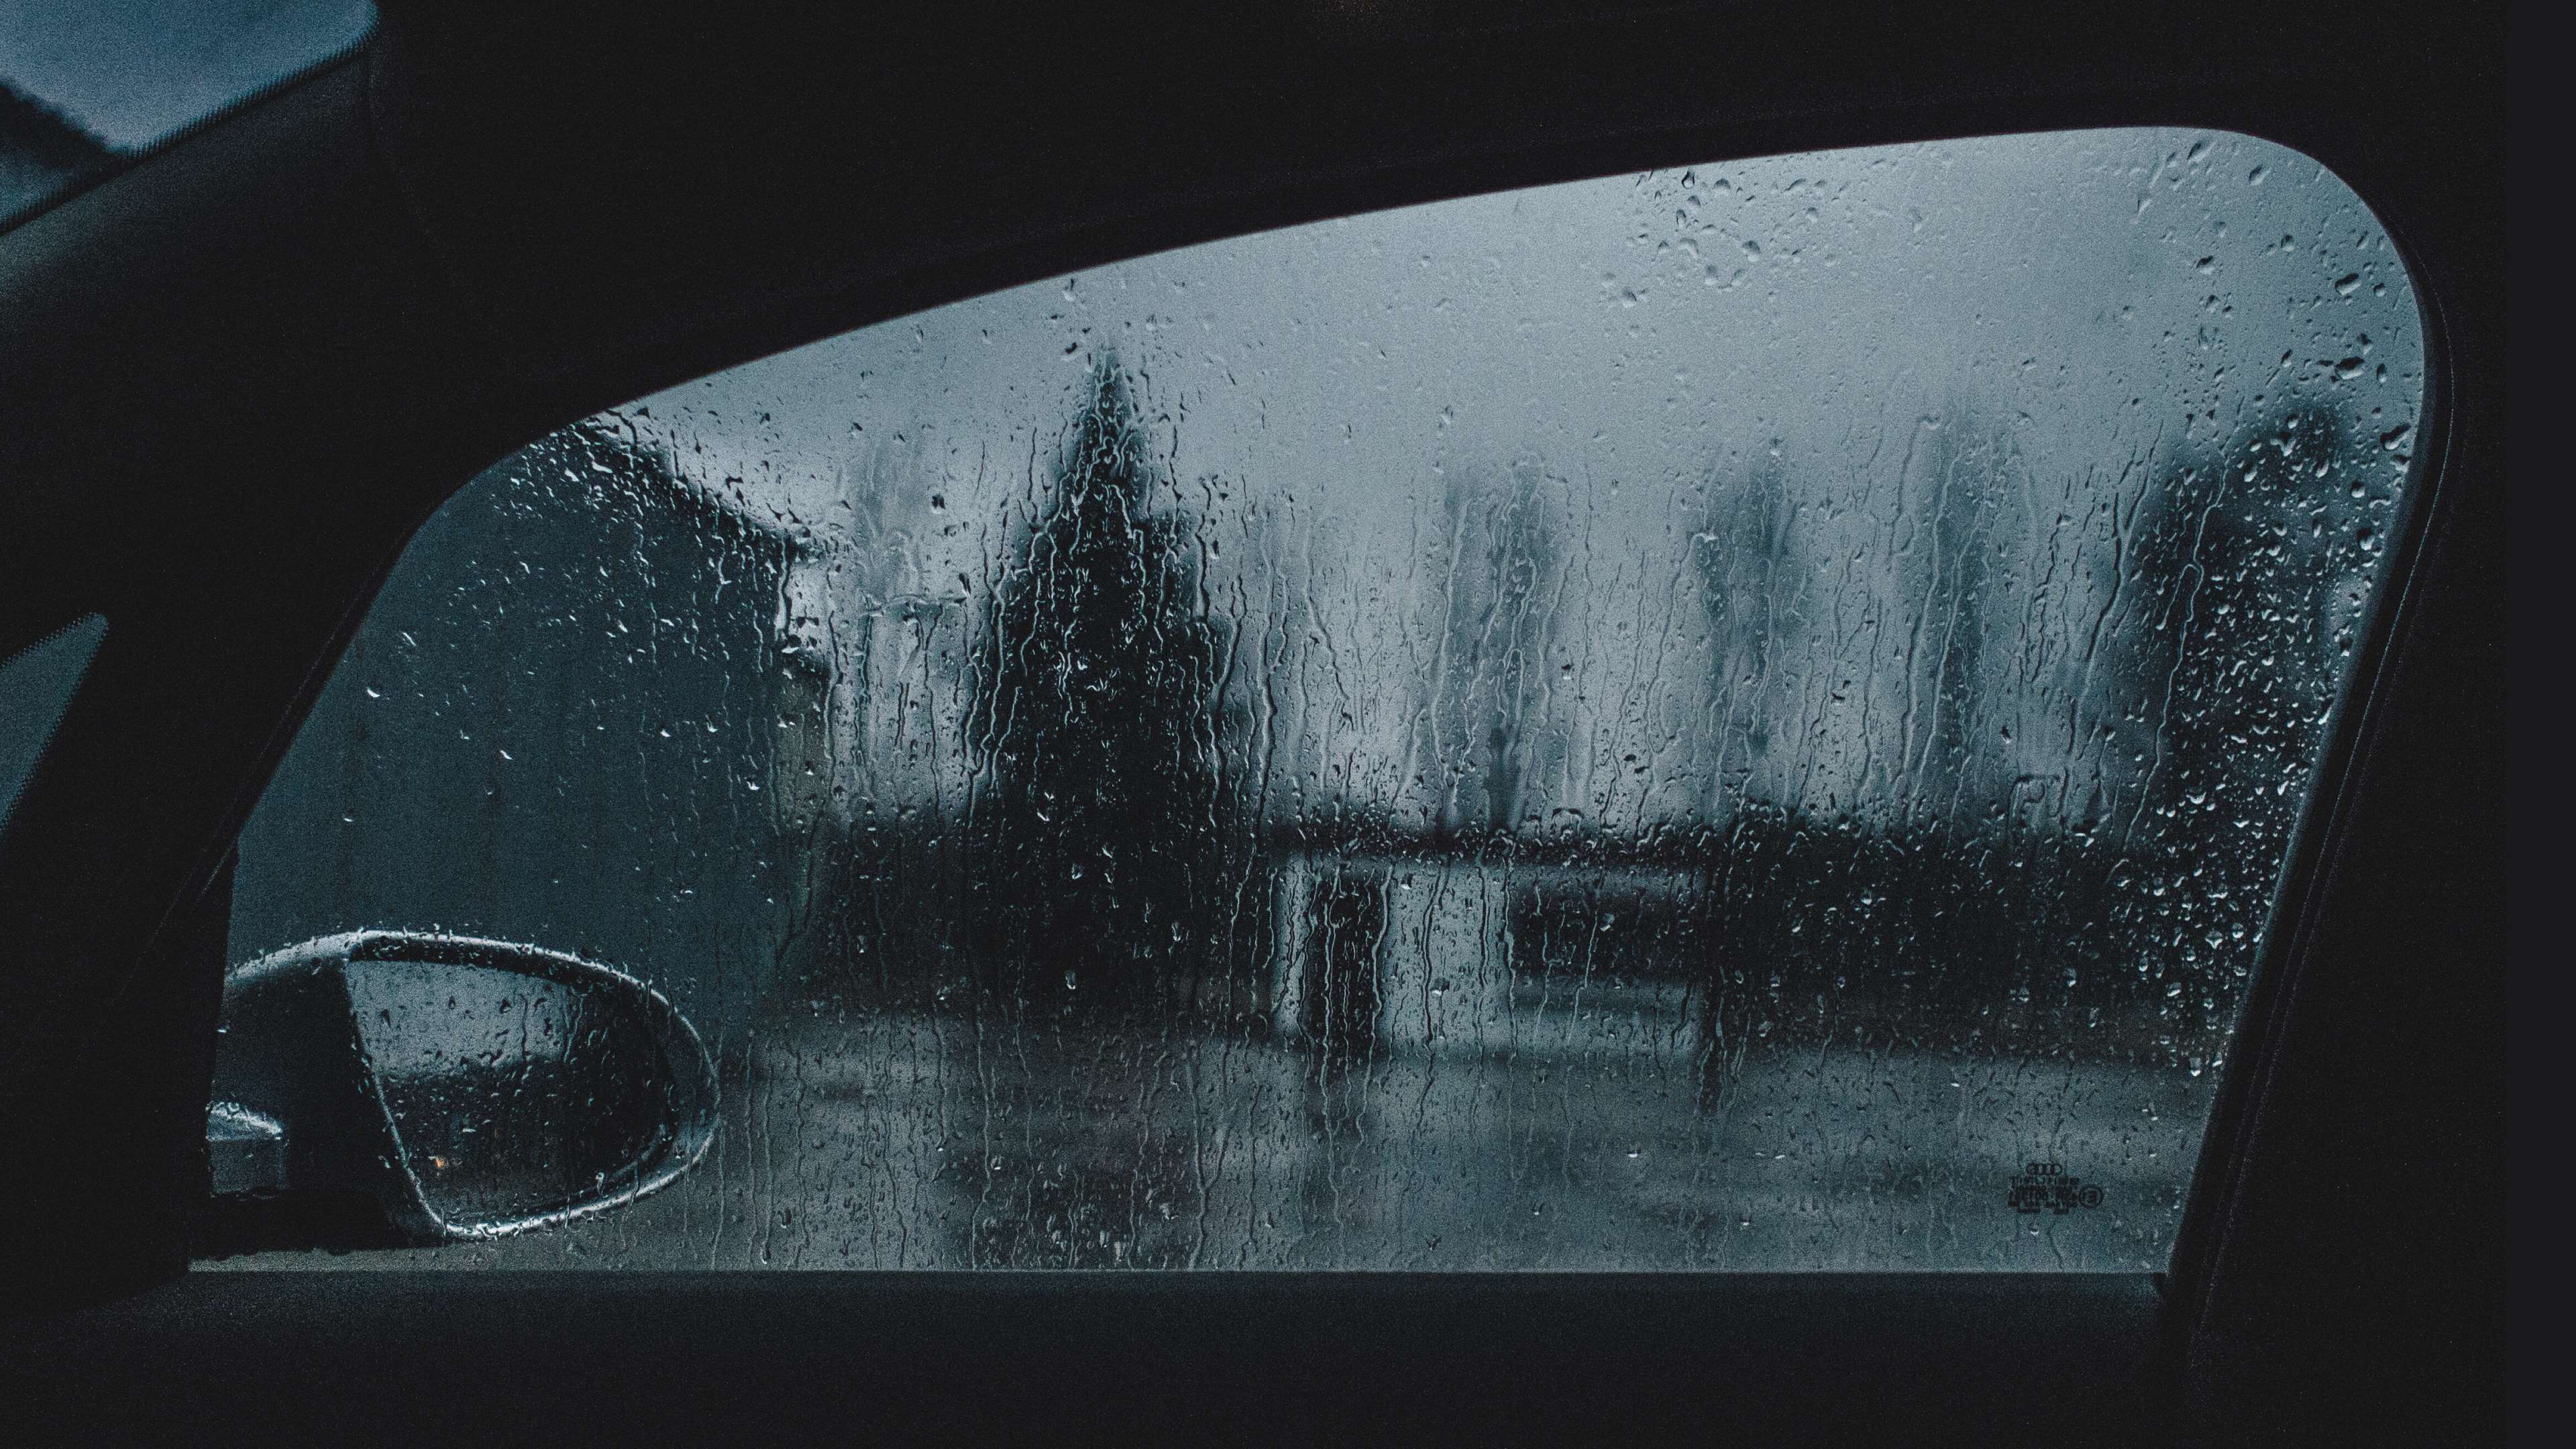 3840x2160 car, clouds, glass, mirror, rain, storm, weather, window 4k wallpaper JPG 953 kB. Mocah HD Wallpaper